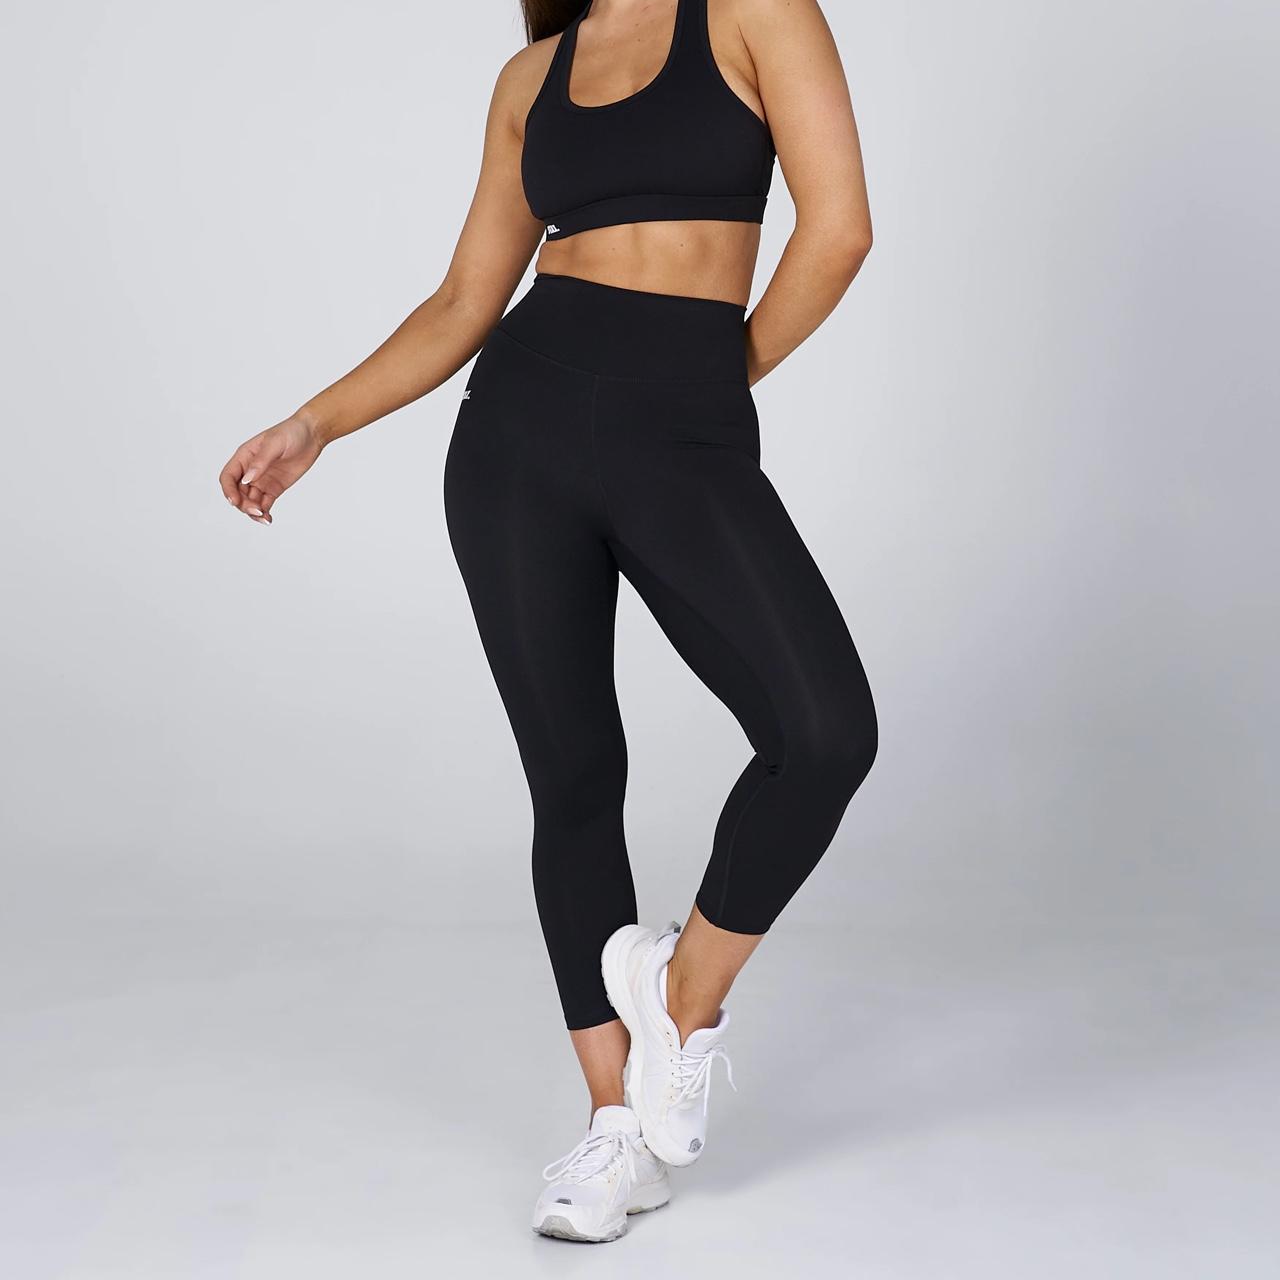 STAX | best black tights 7/8 (size S) - leggings -... - Depop